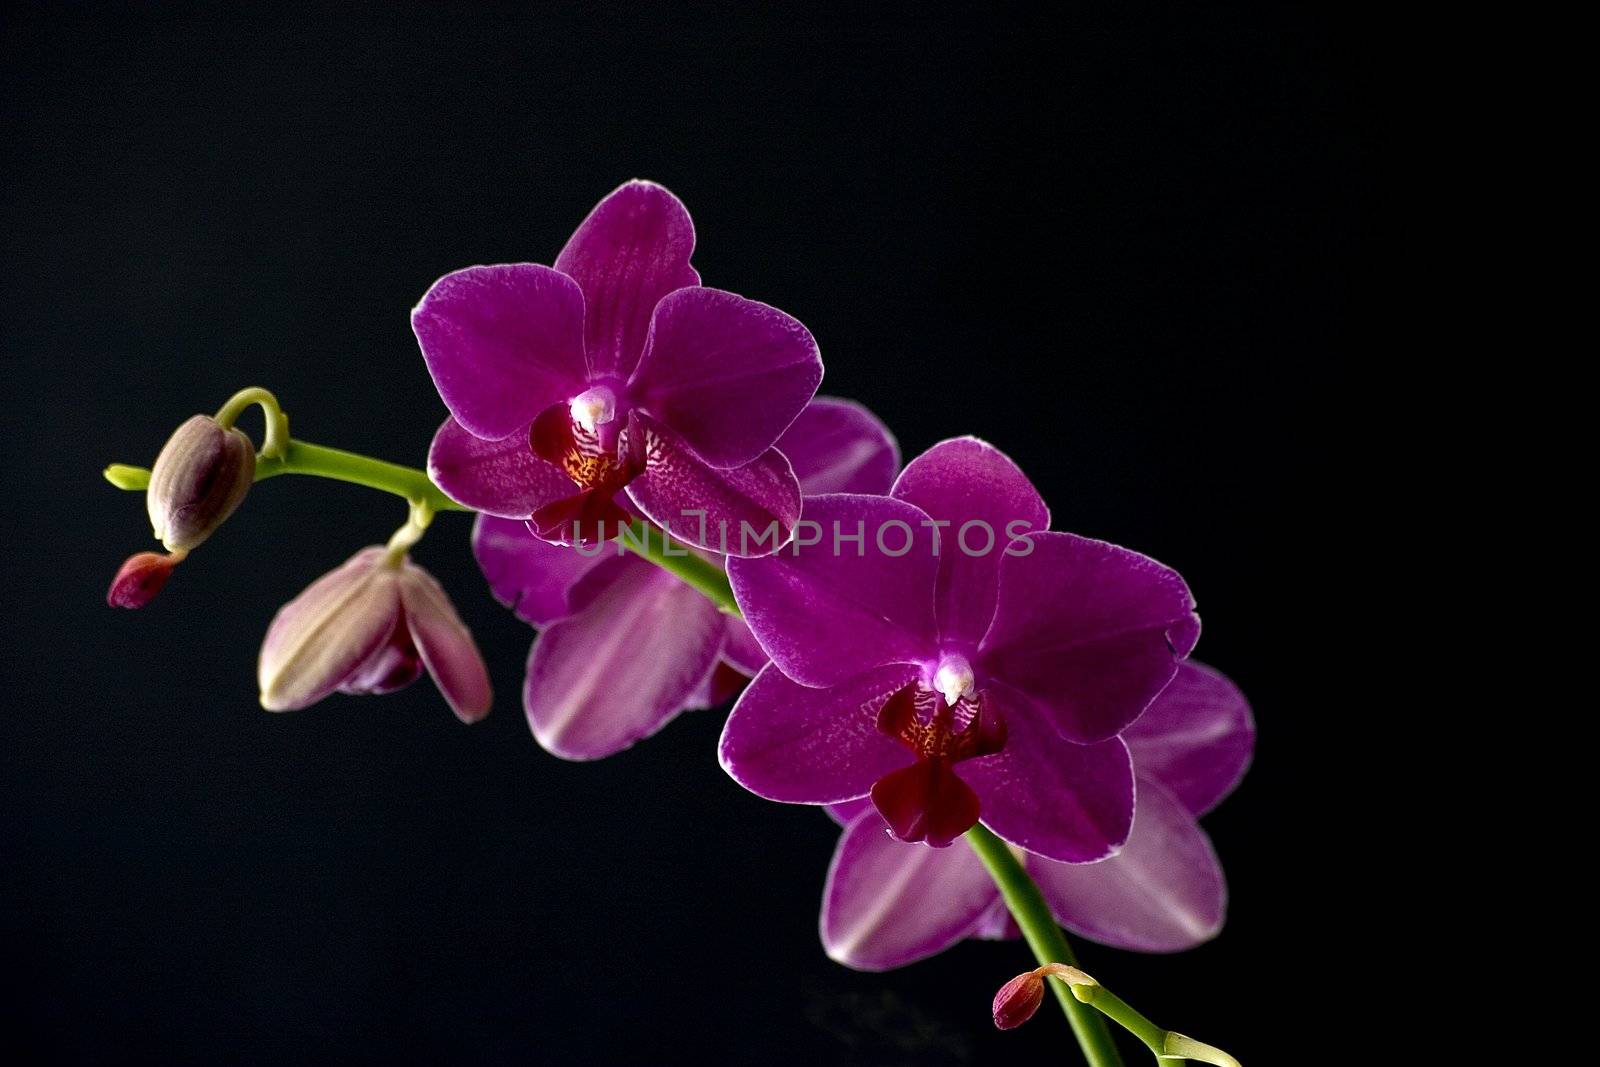 Four Orchids by miradrozdowski